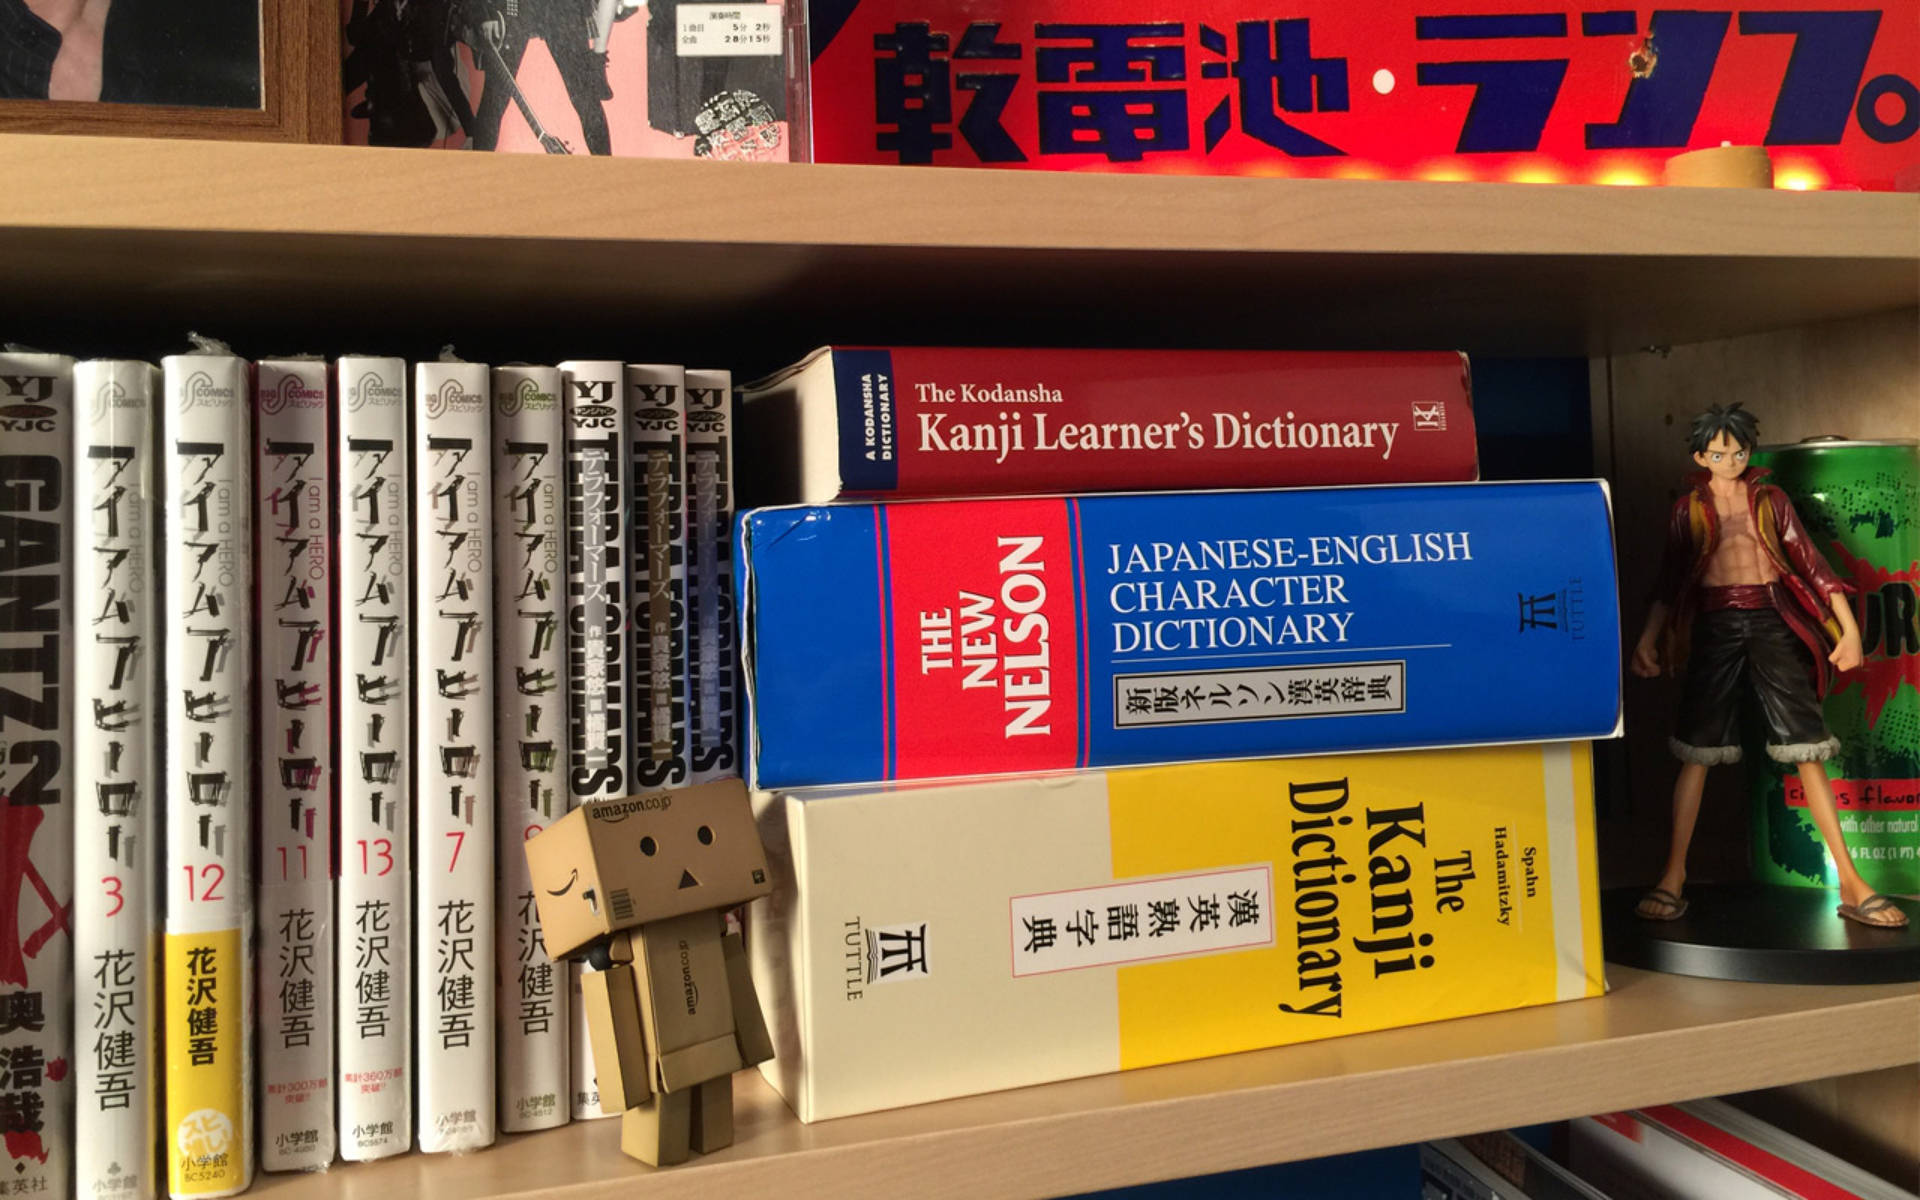 Dictionary In Bookshelf